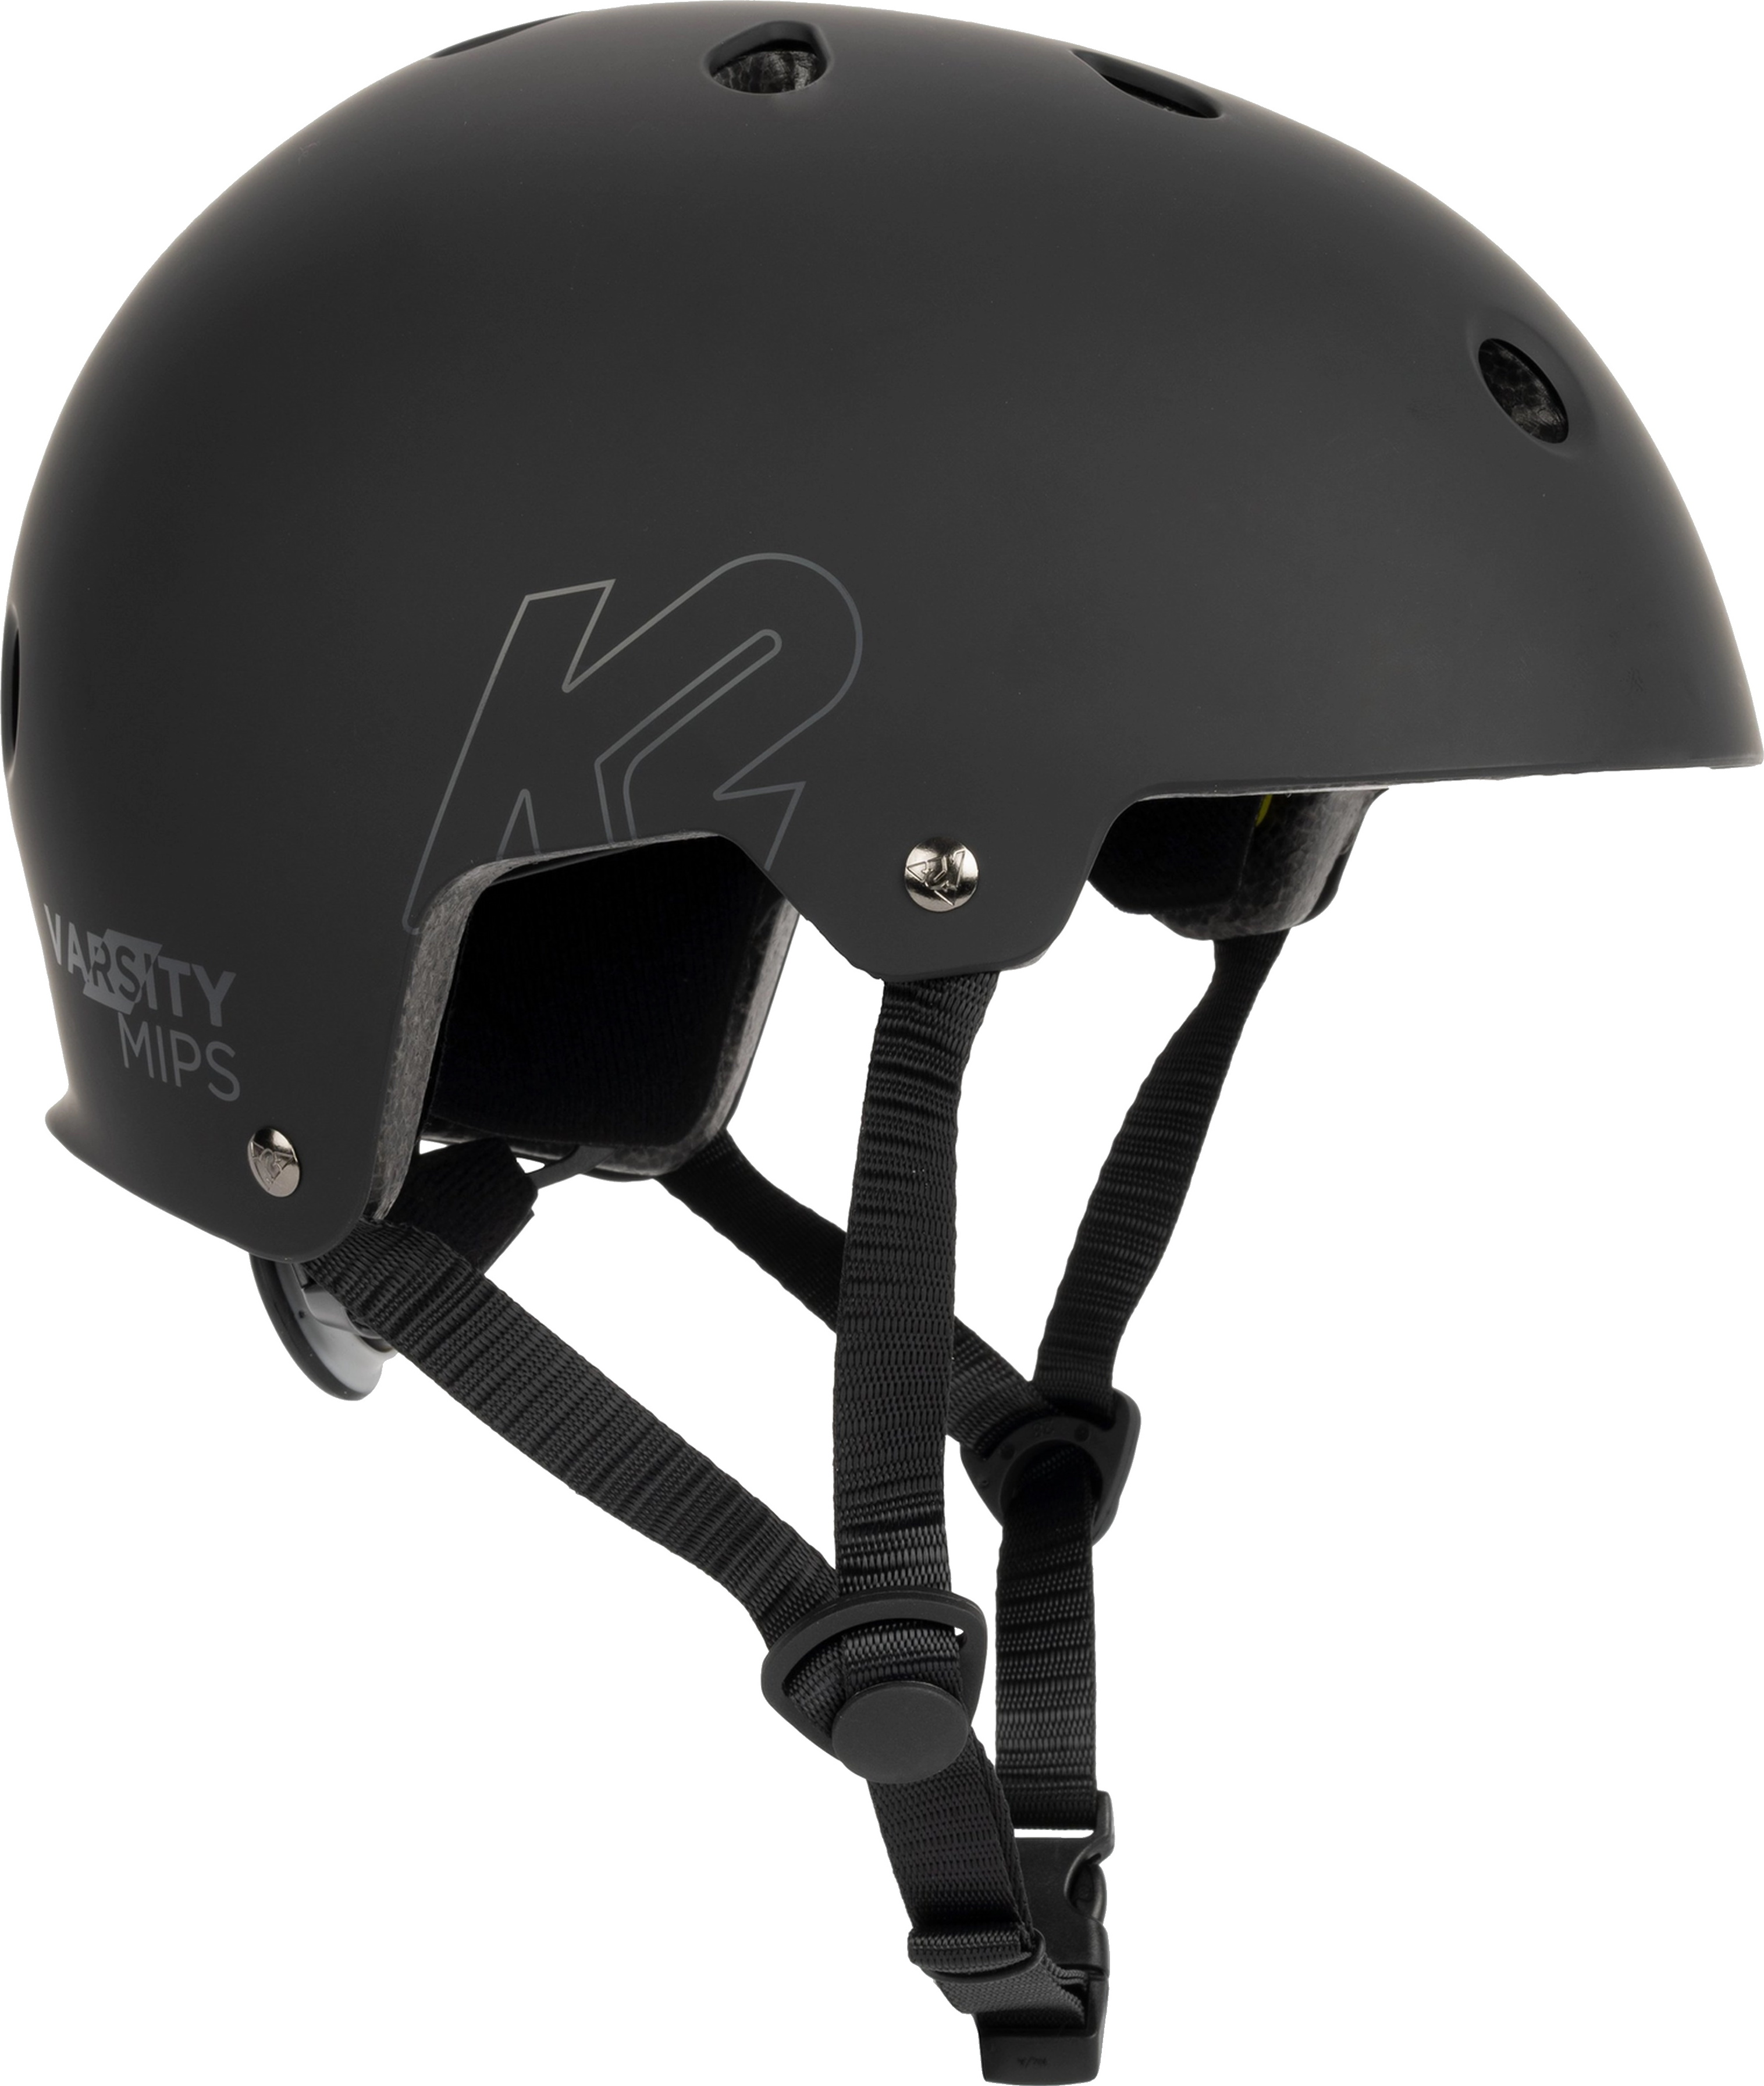 K2 Sports Varsity Mips Helmet Black